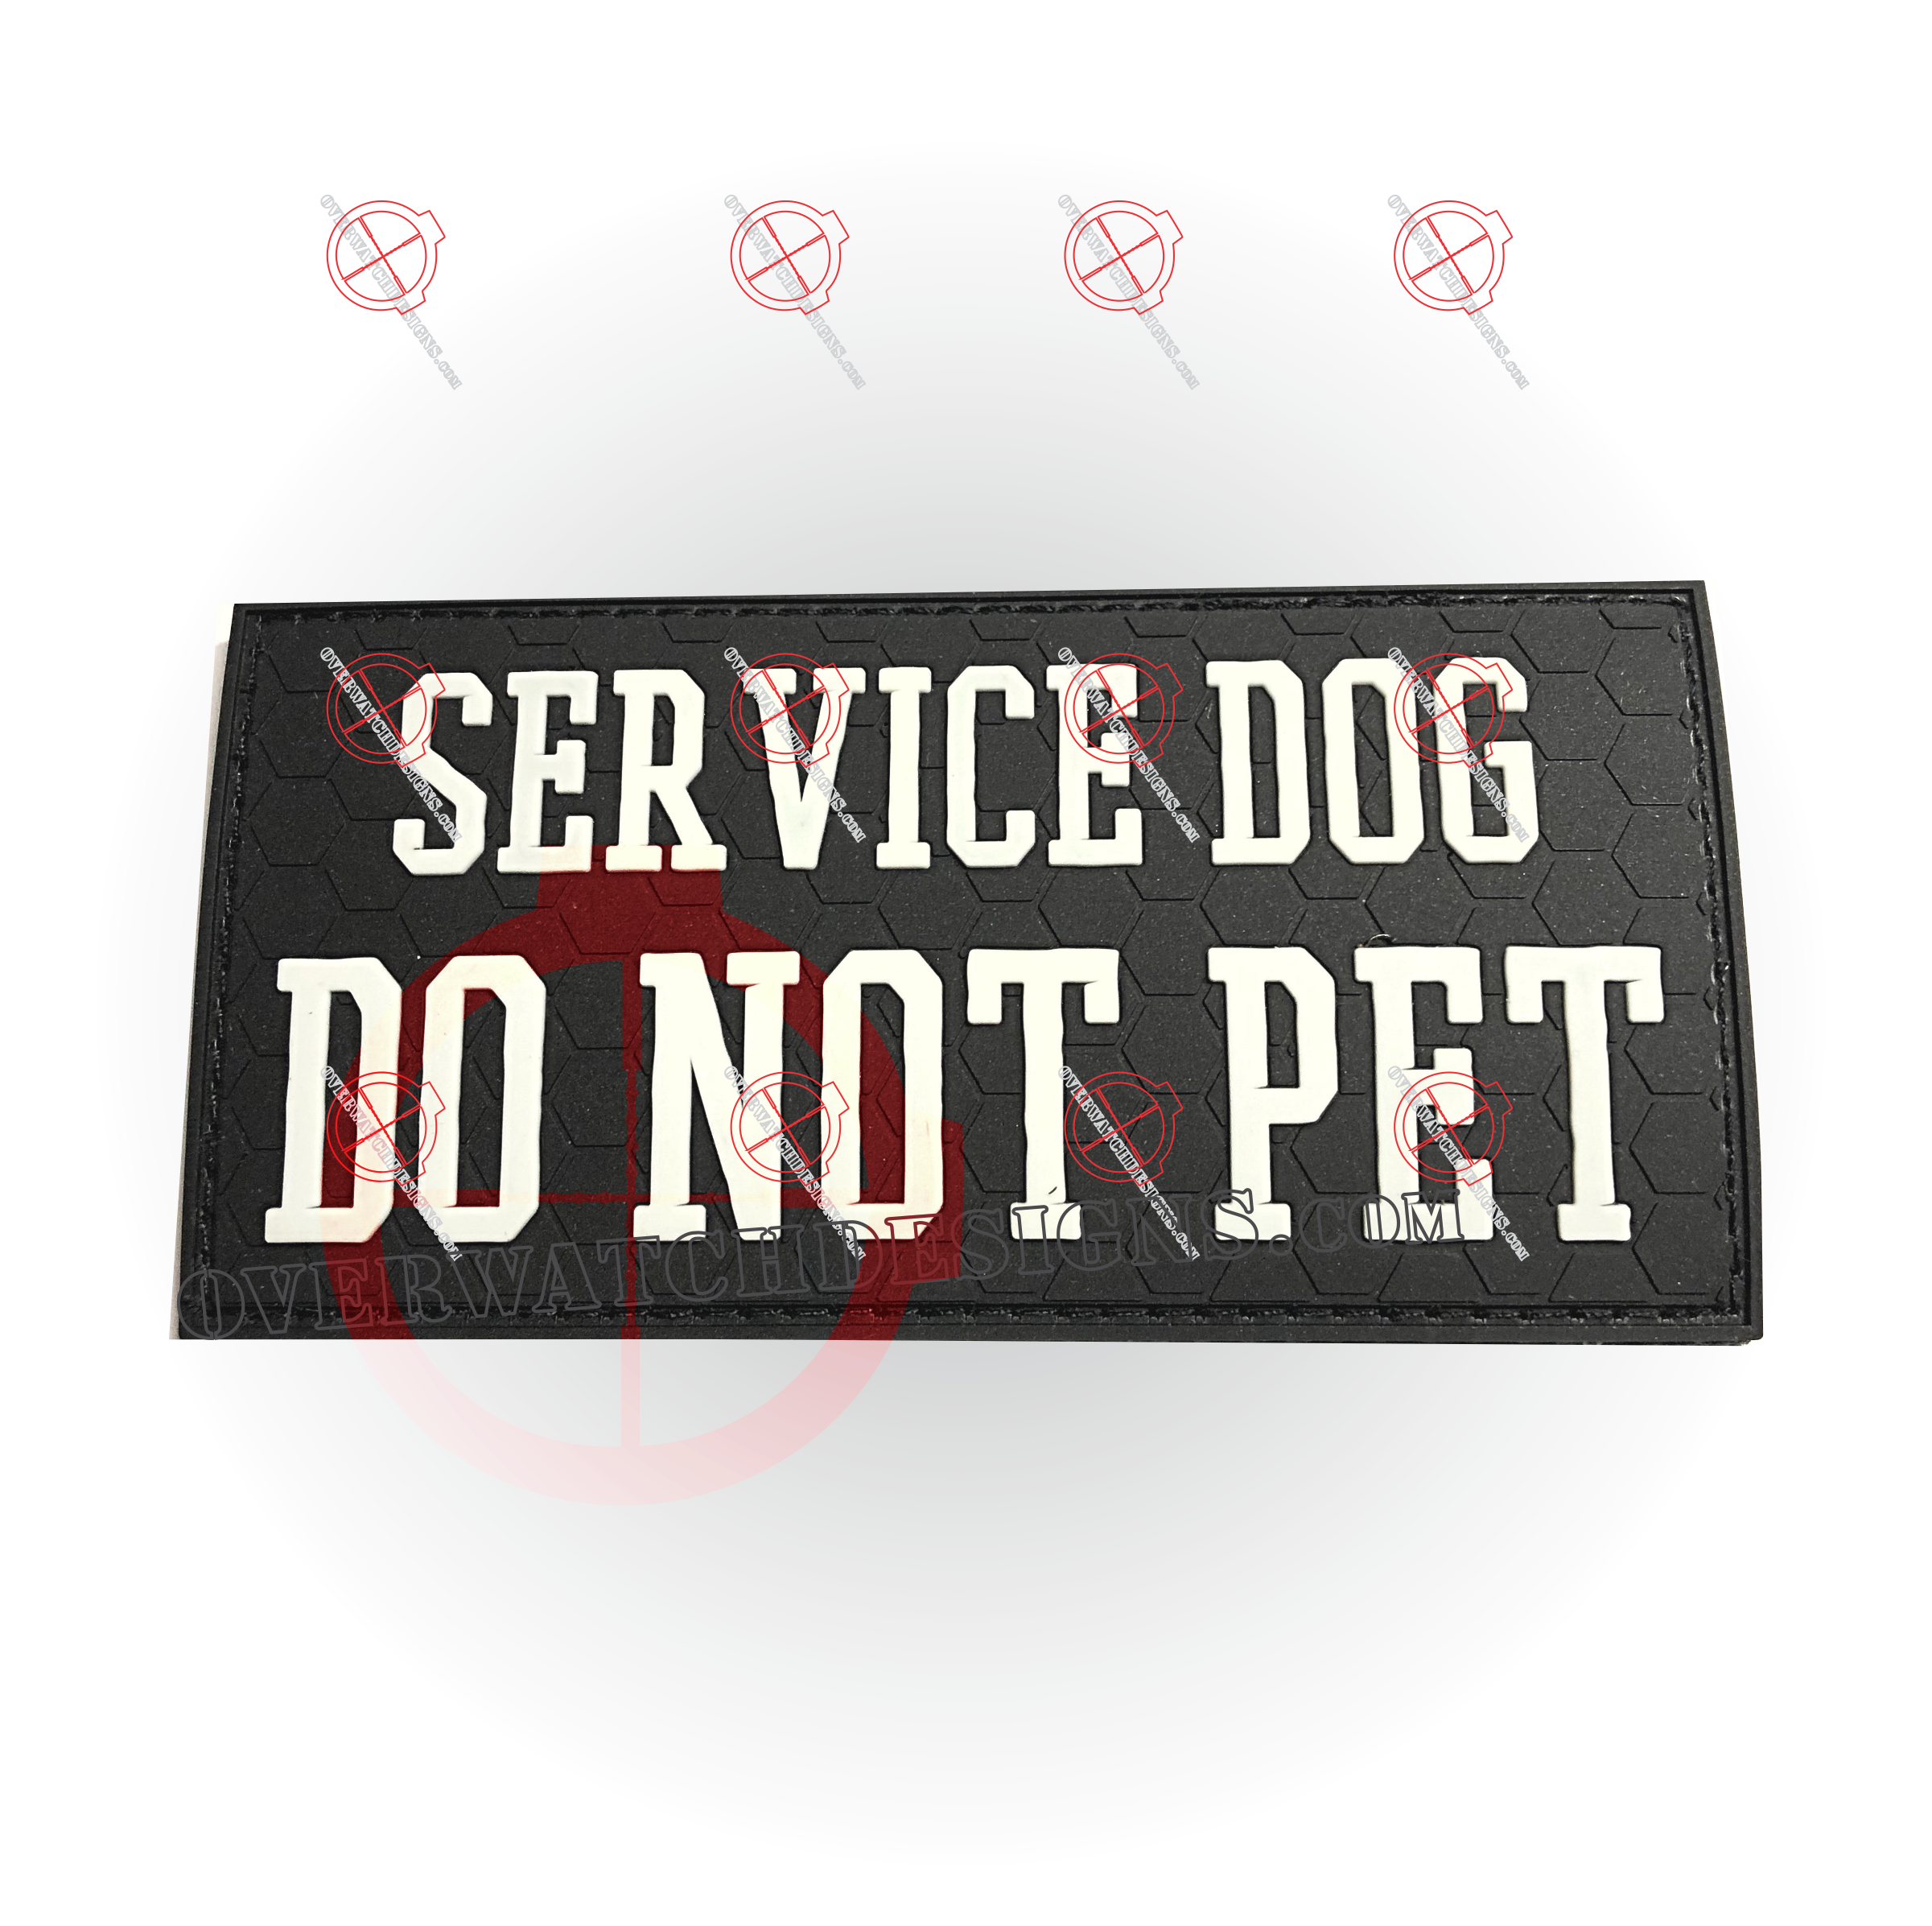 Service Dog Patch - Overwatch Designs